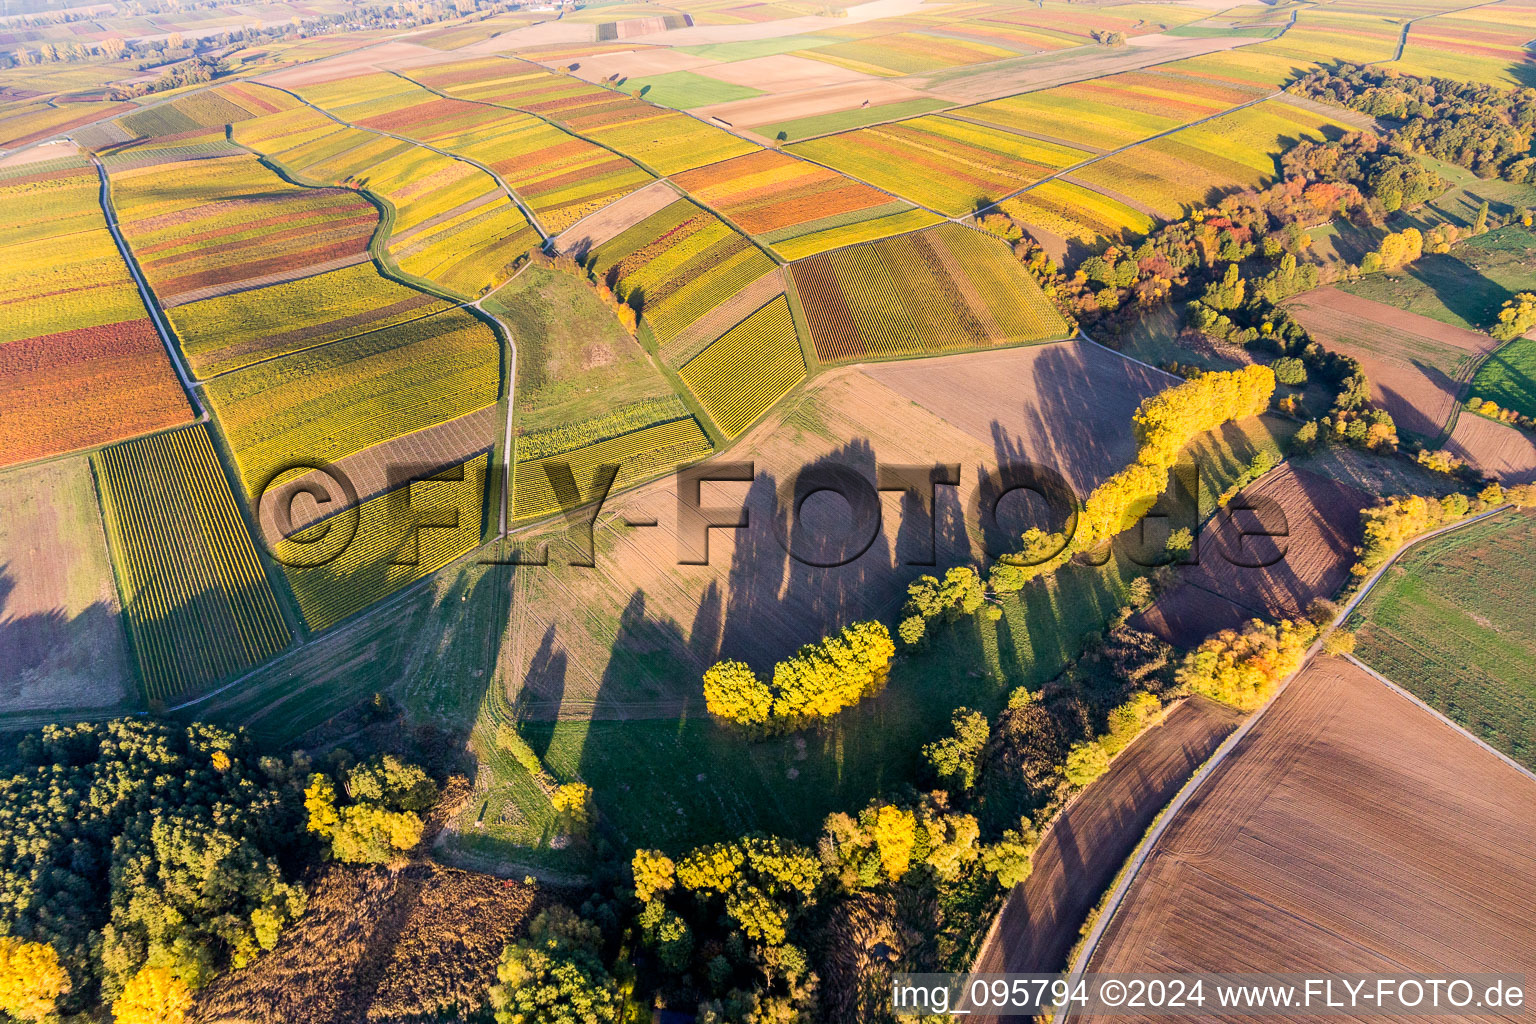 Fields of wine cultivation landscape in Heuchelheim-Klingen in the state Rhineland-Palatinate, Germany